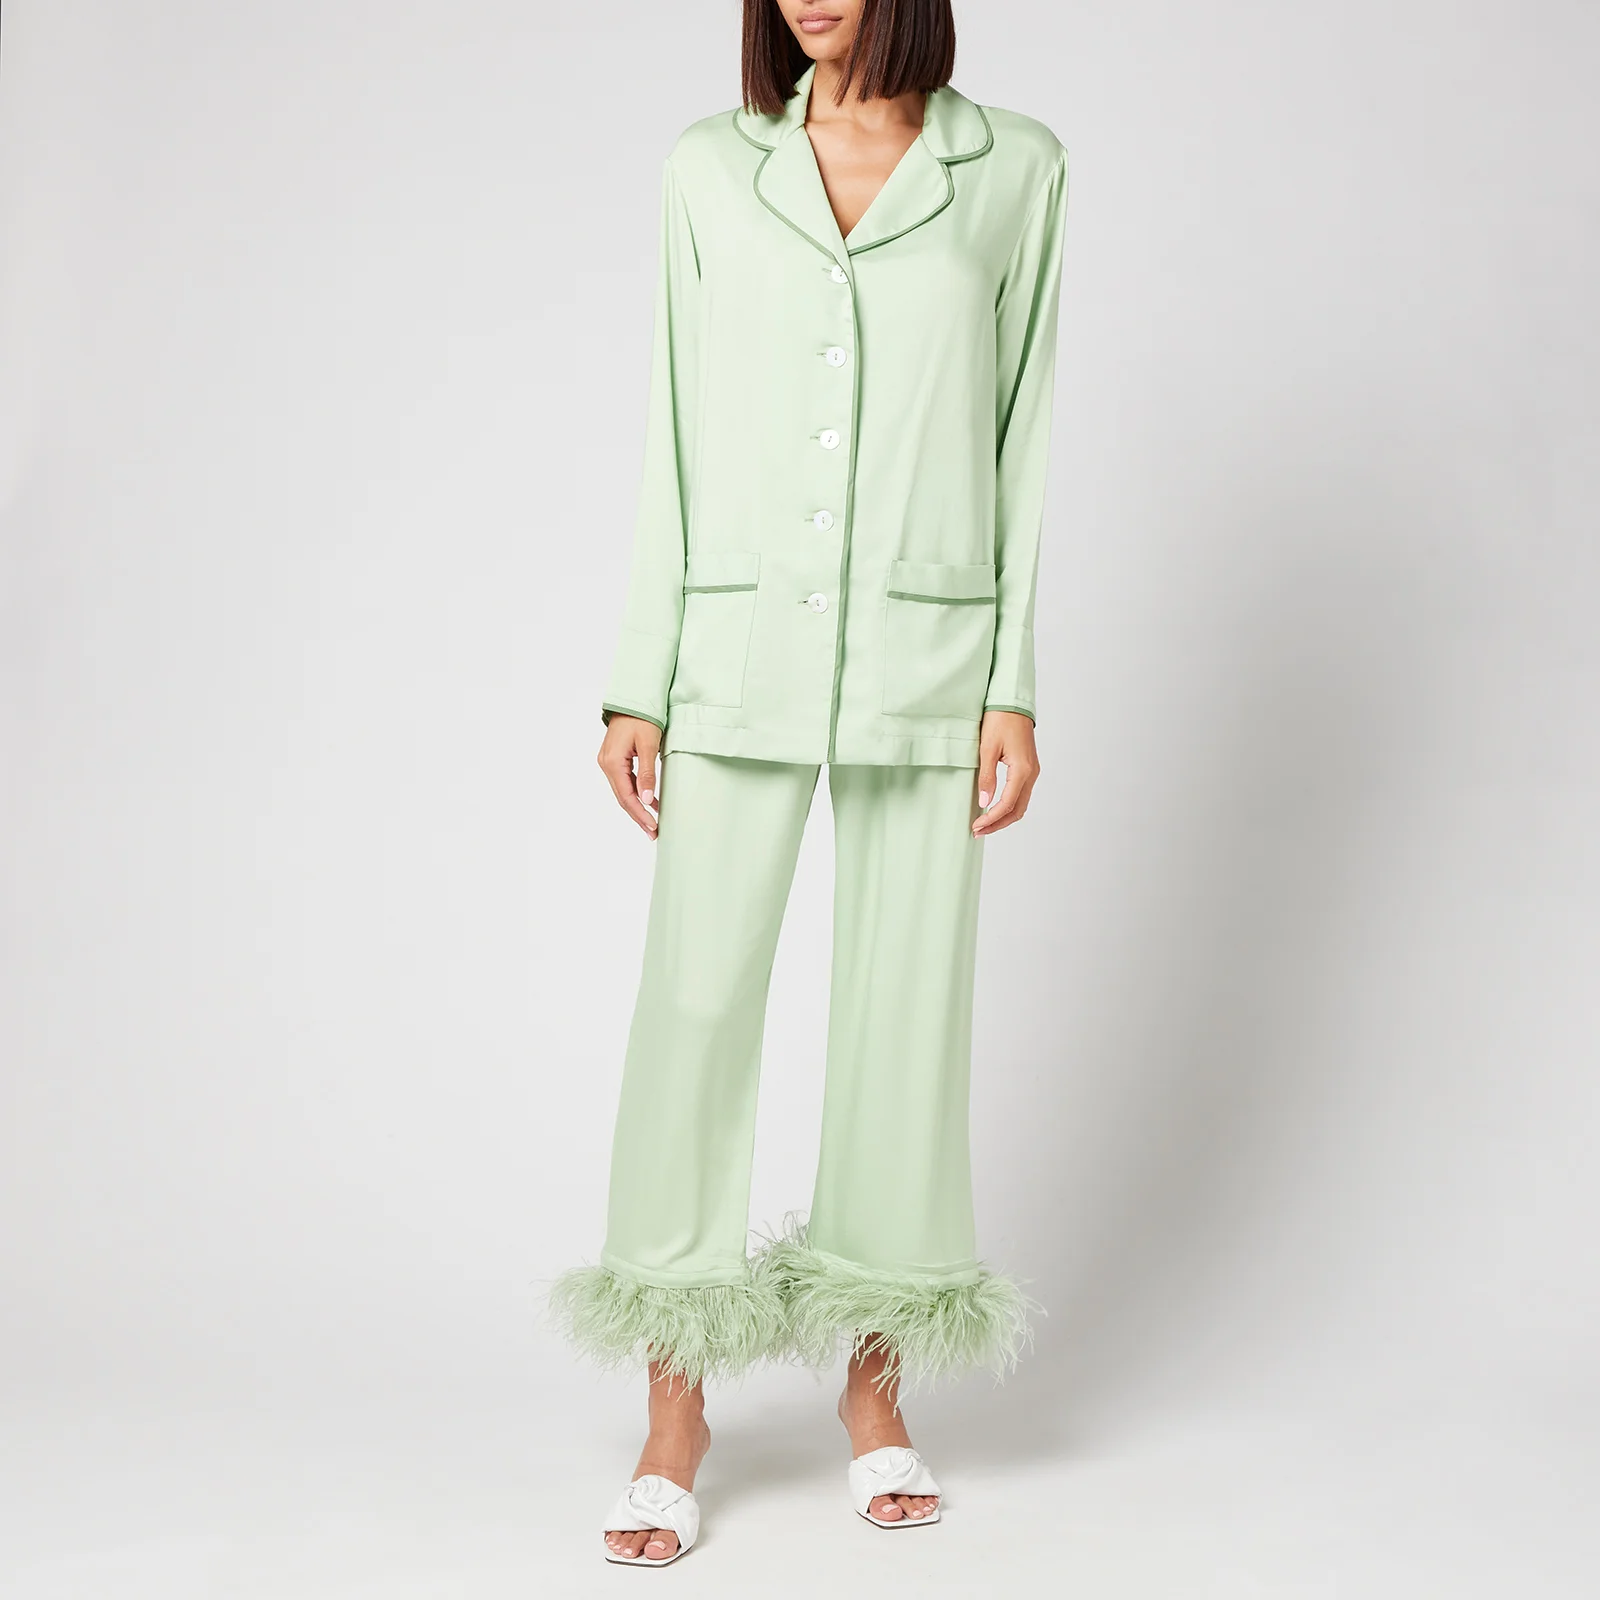 Sleeper Women's Party Pyjama Set With Feathers - Mint Image 1